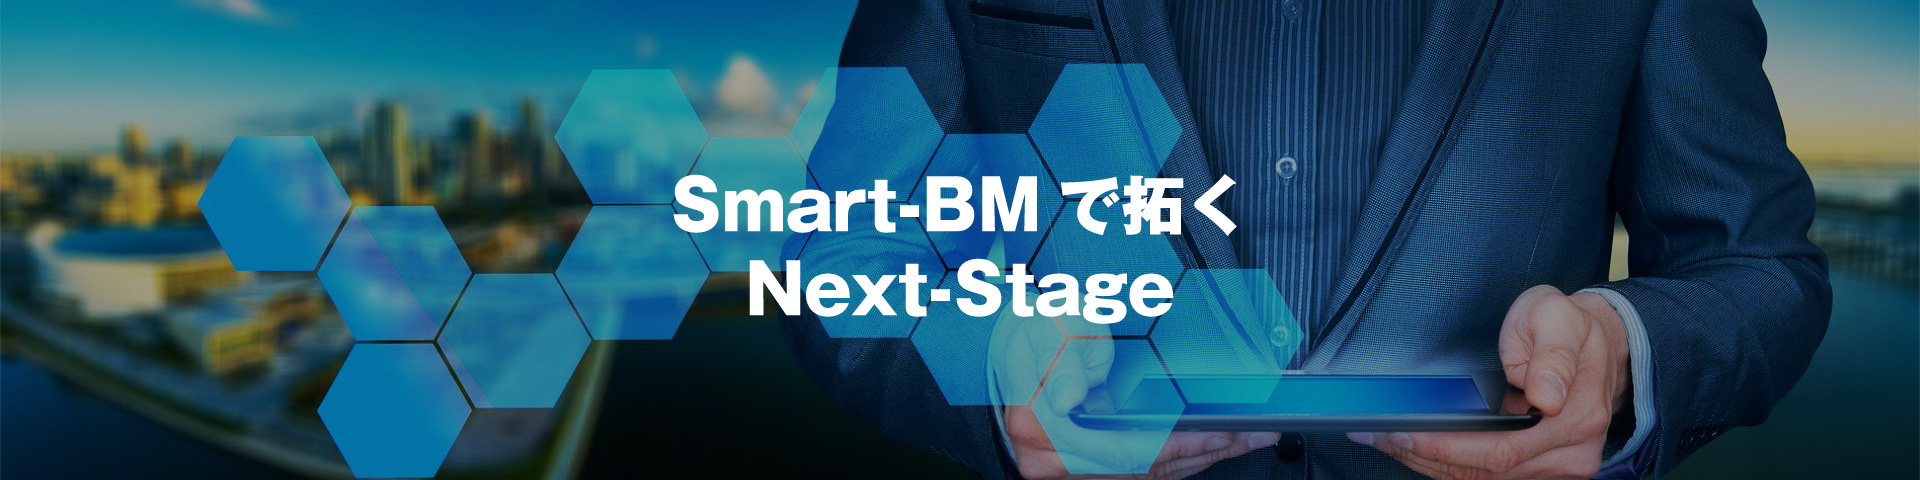 Smart-BMで拓くNext-Stage